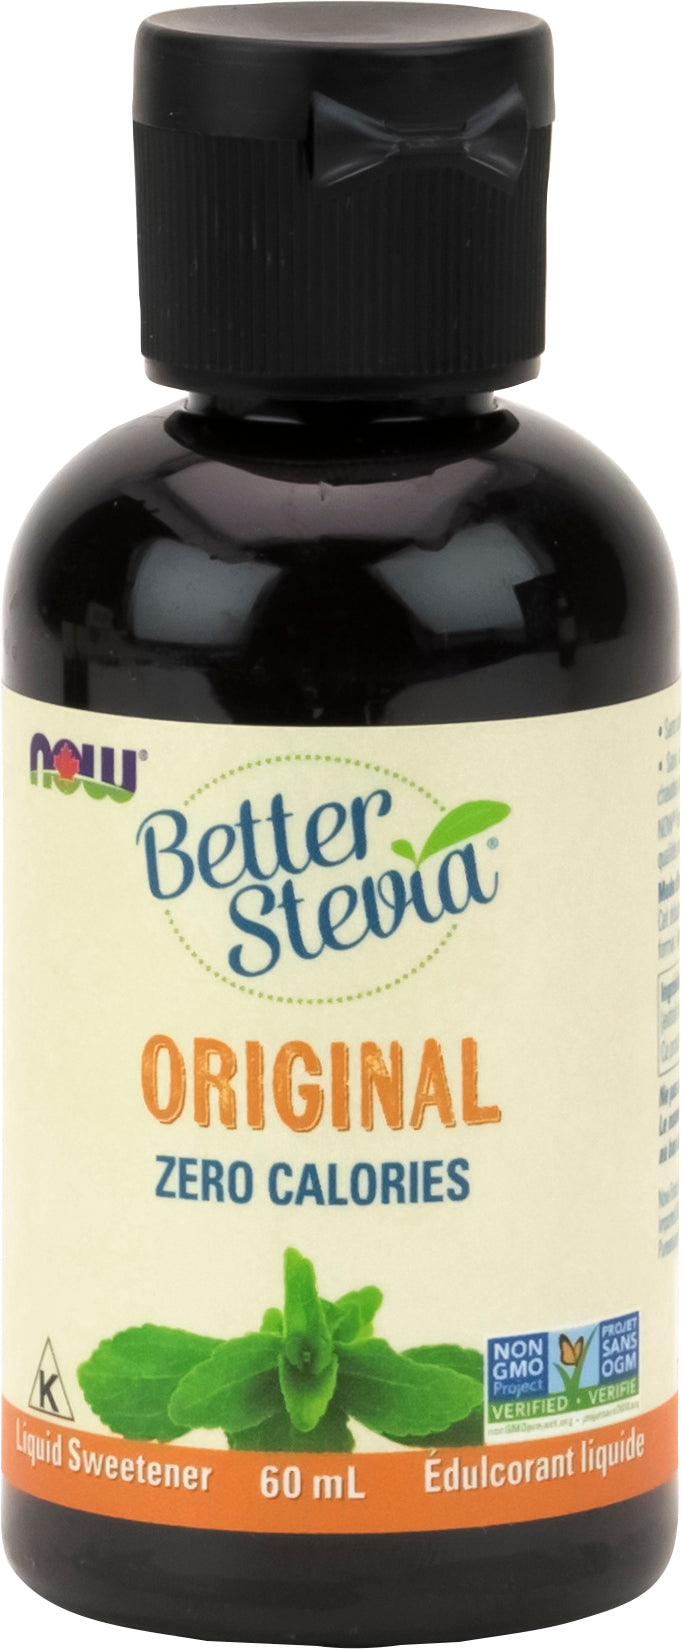 NOW BetterStevia Original Liquid Extract 60ml